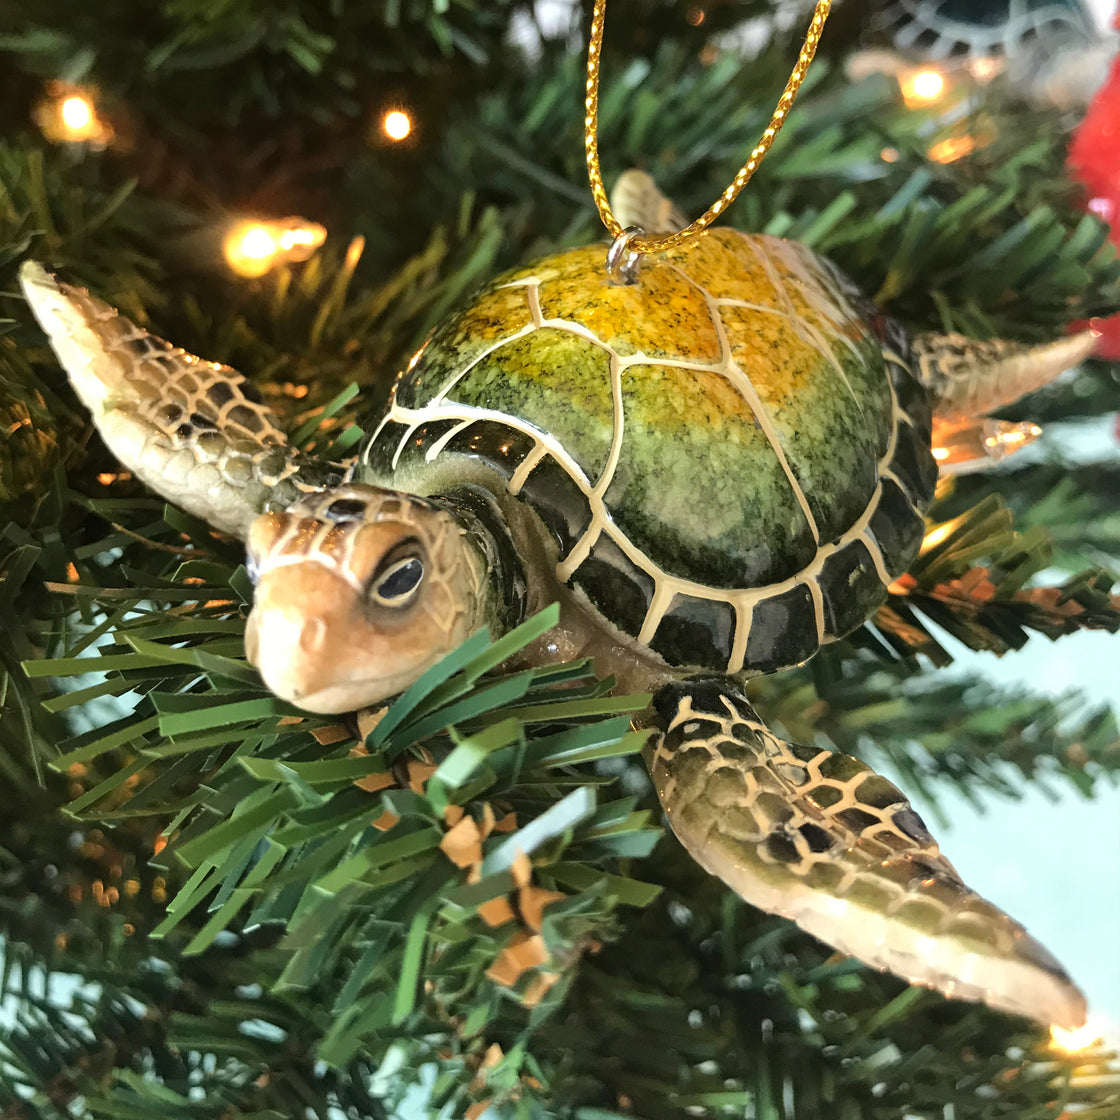 Green sea turtle ceramic ornament hanging on Christmas tree